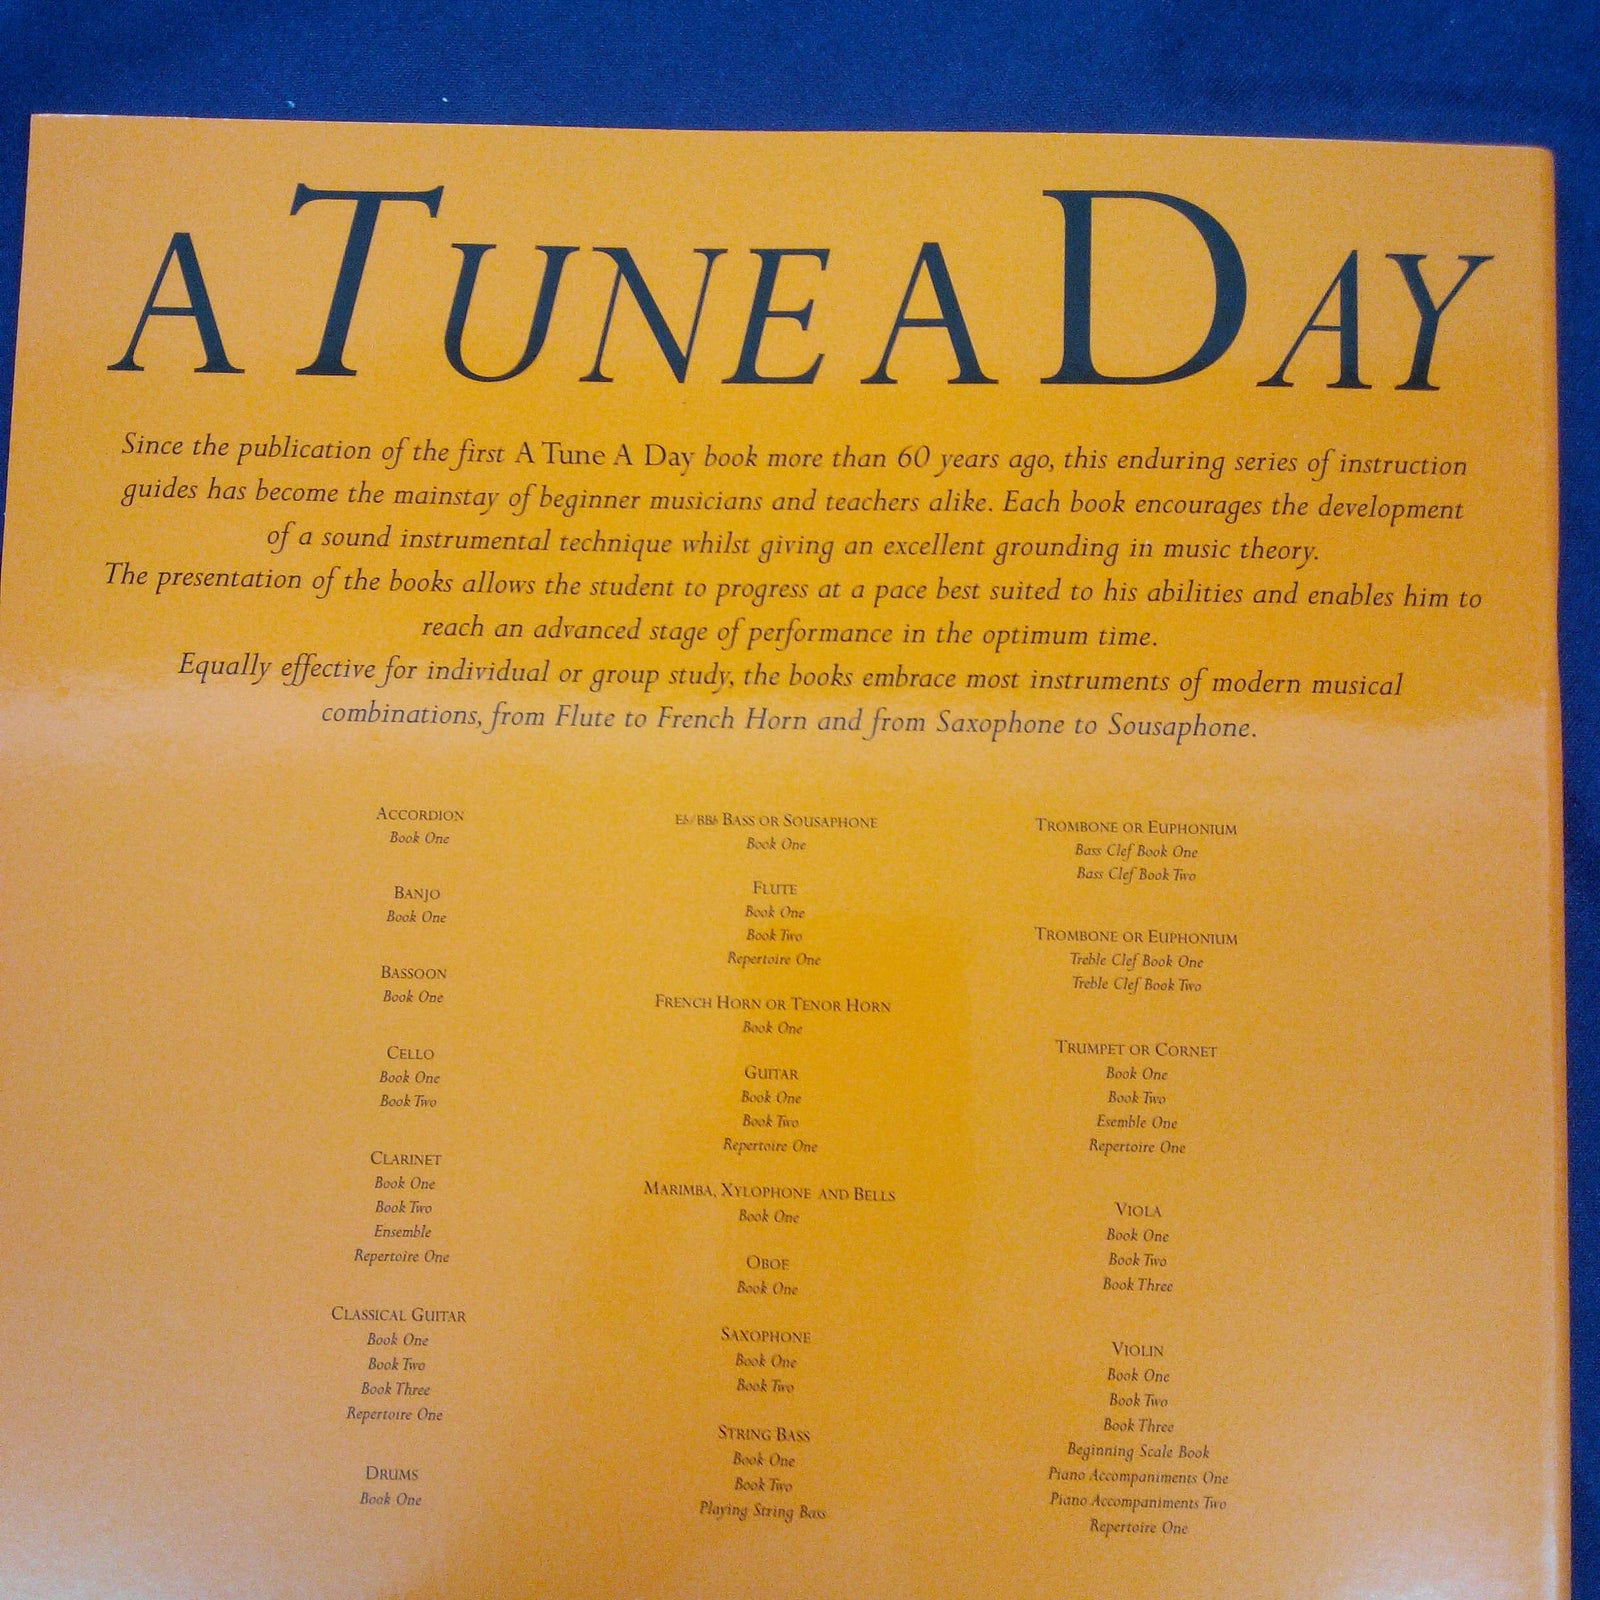 MSL Tune A Day Trumpet/Cornet Book 1